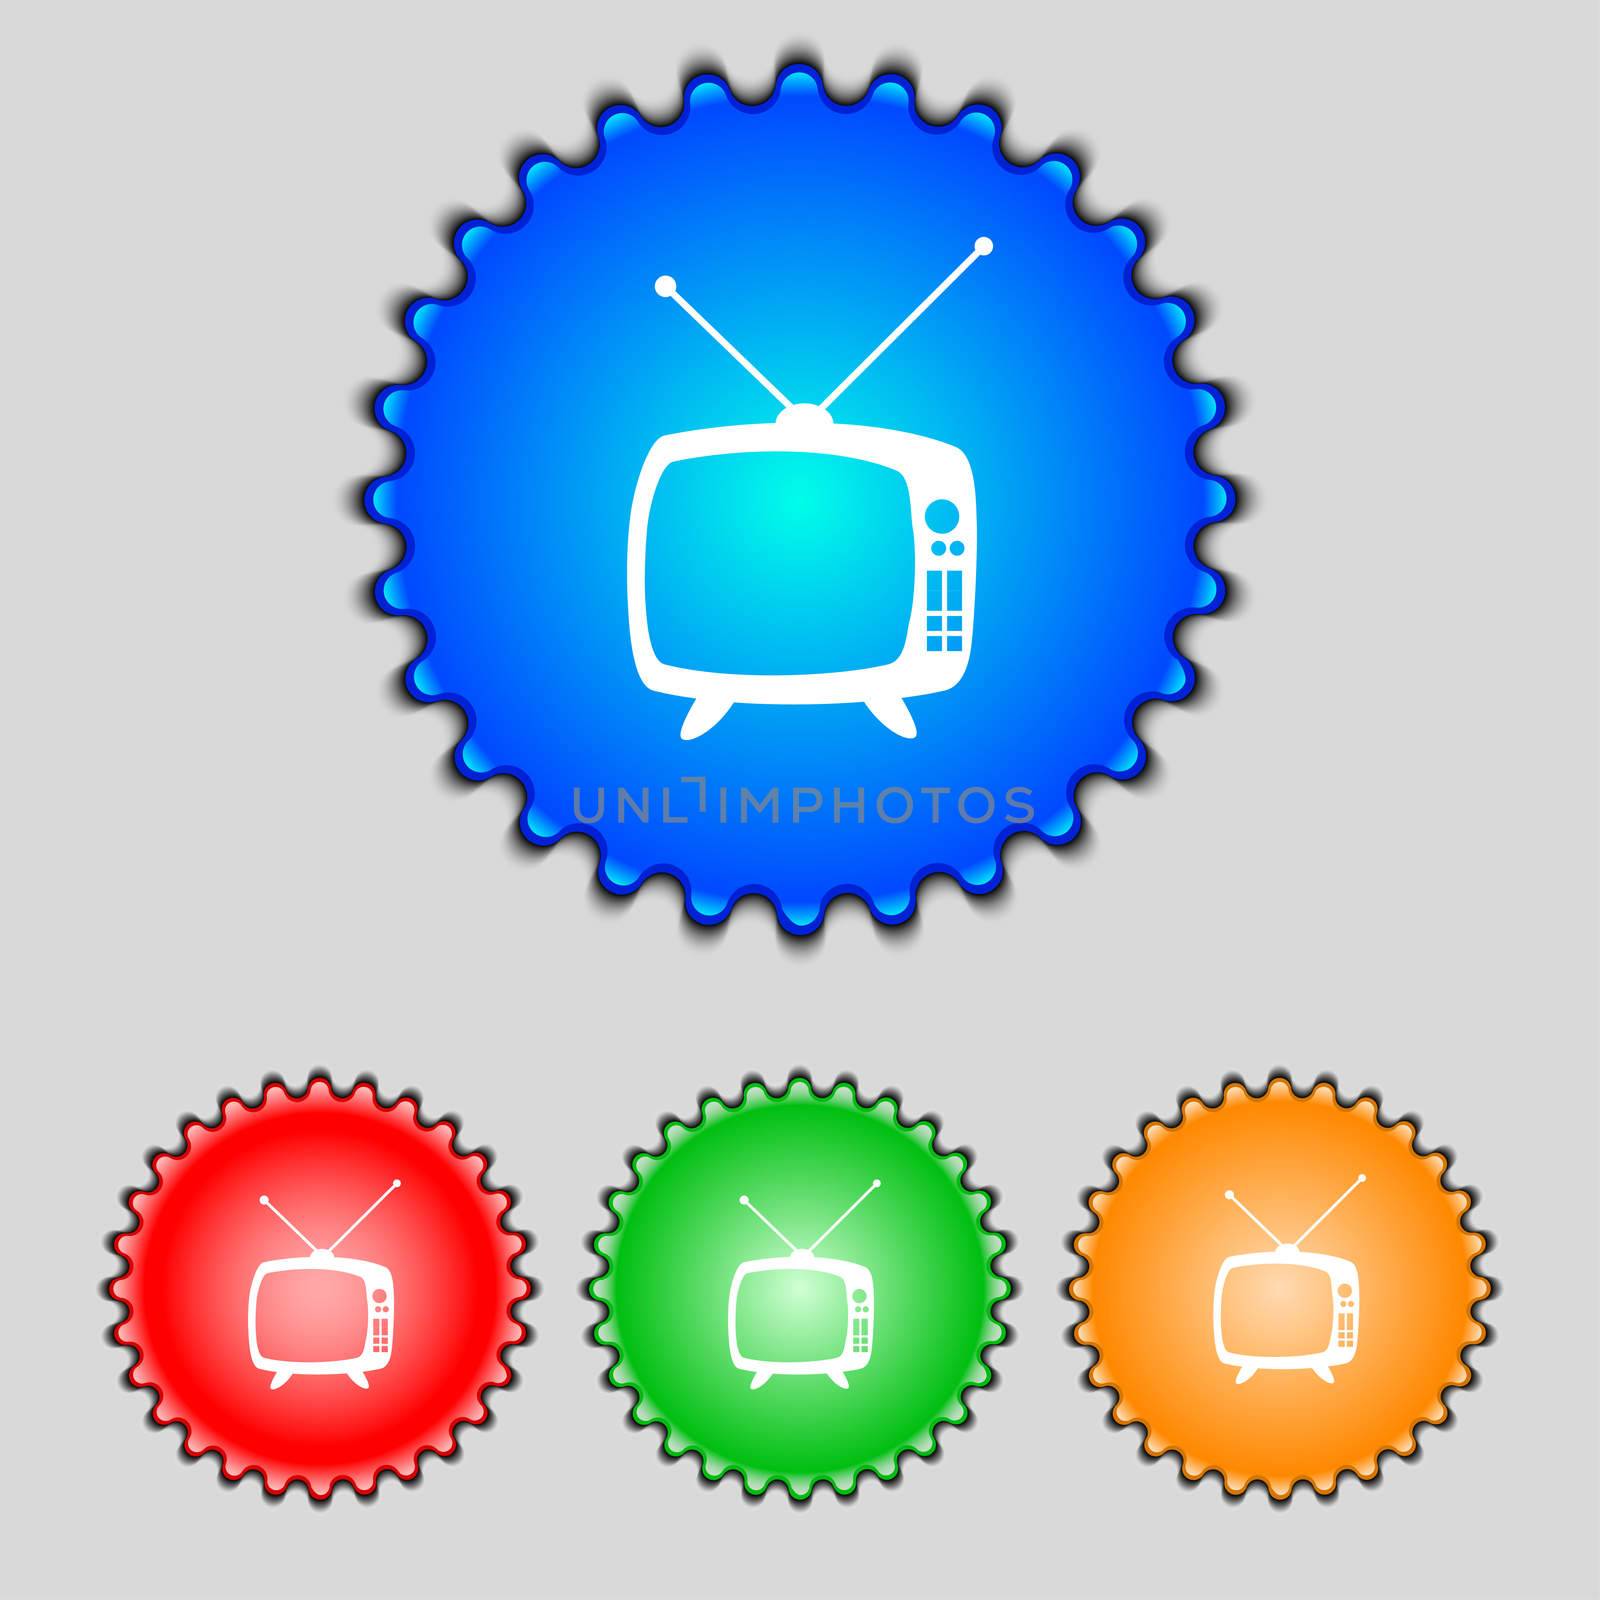 Retro TV mode sign icon. Television set symbol. Set colourful buttons. Hand cursor pointer illustration